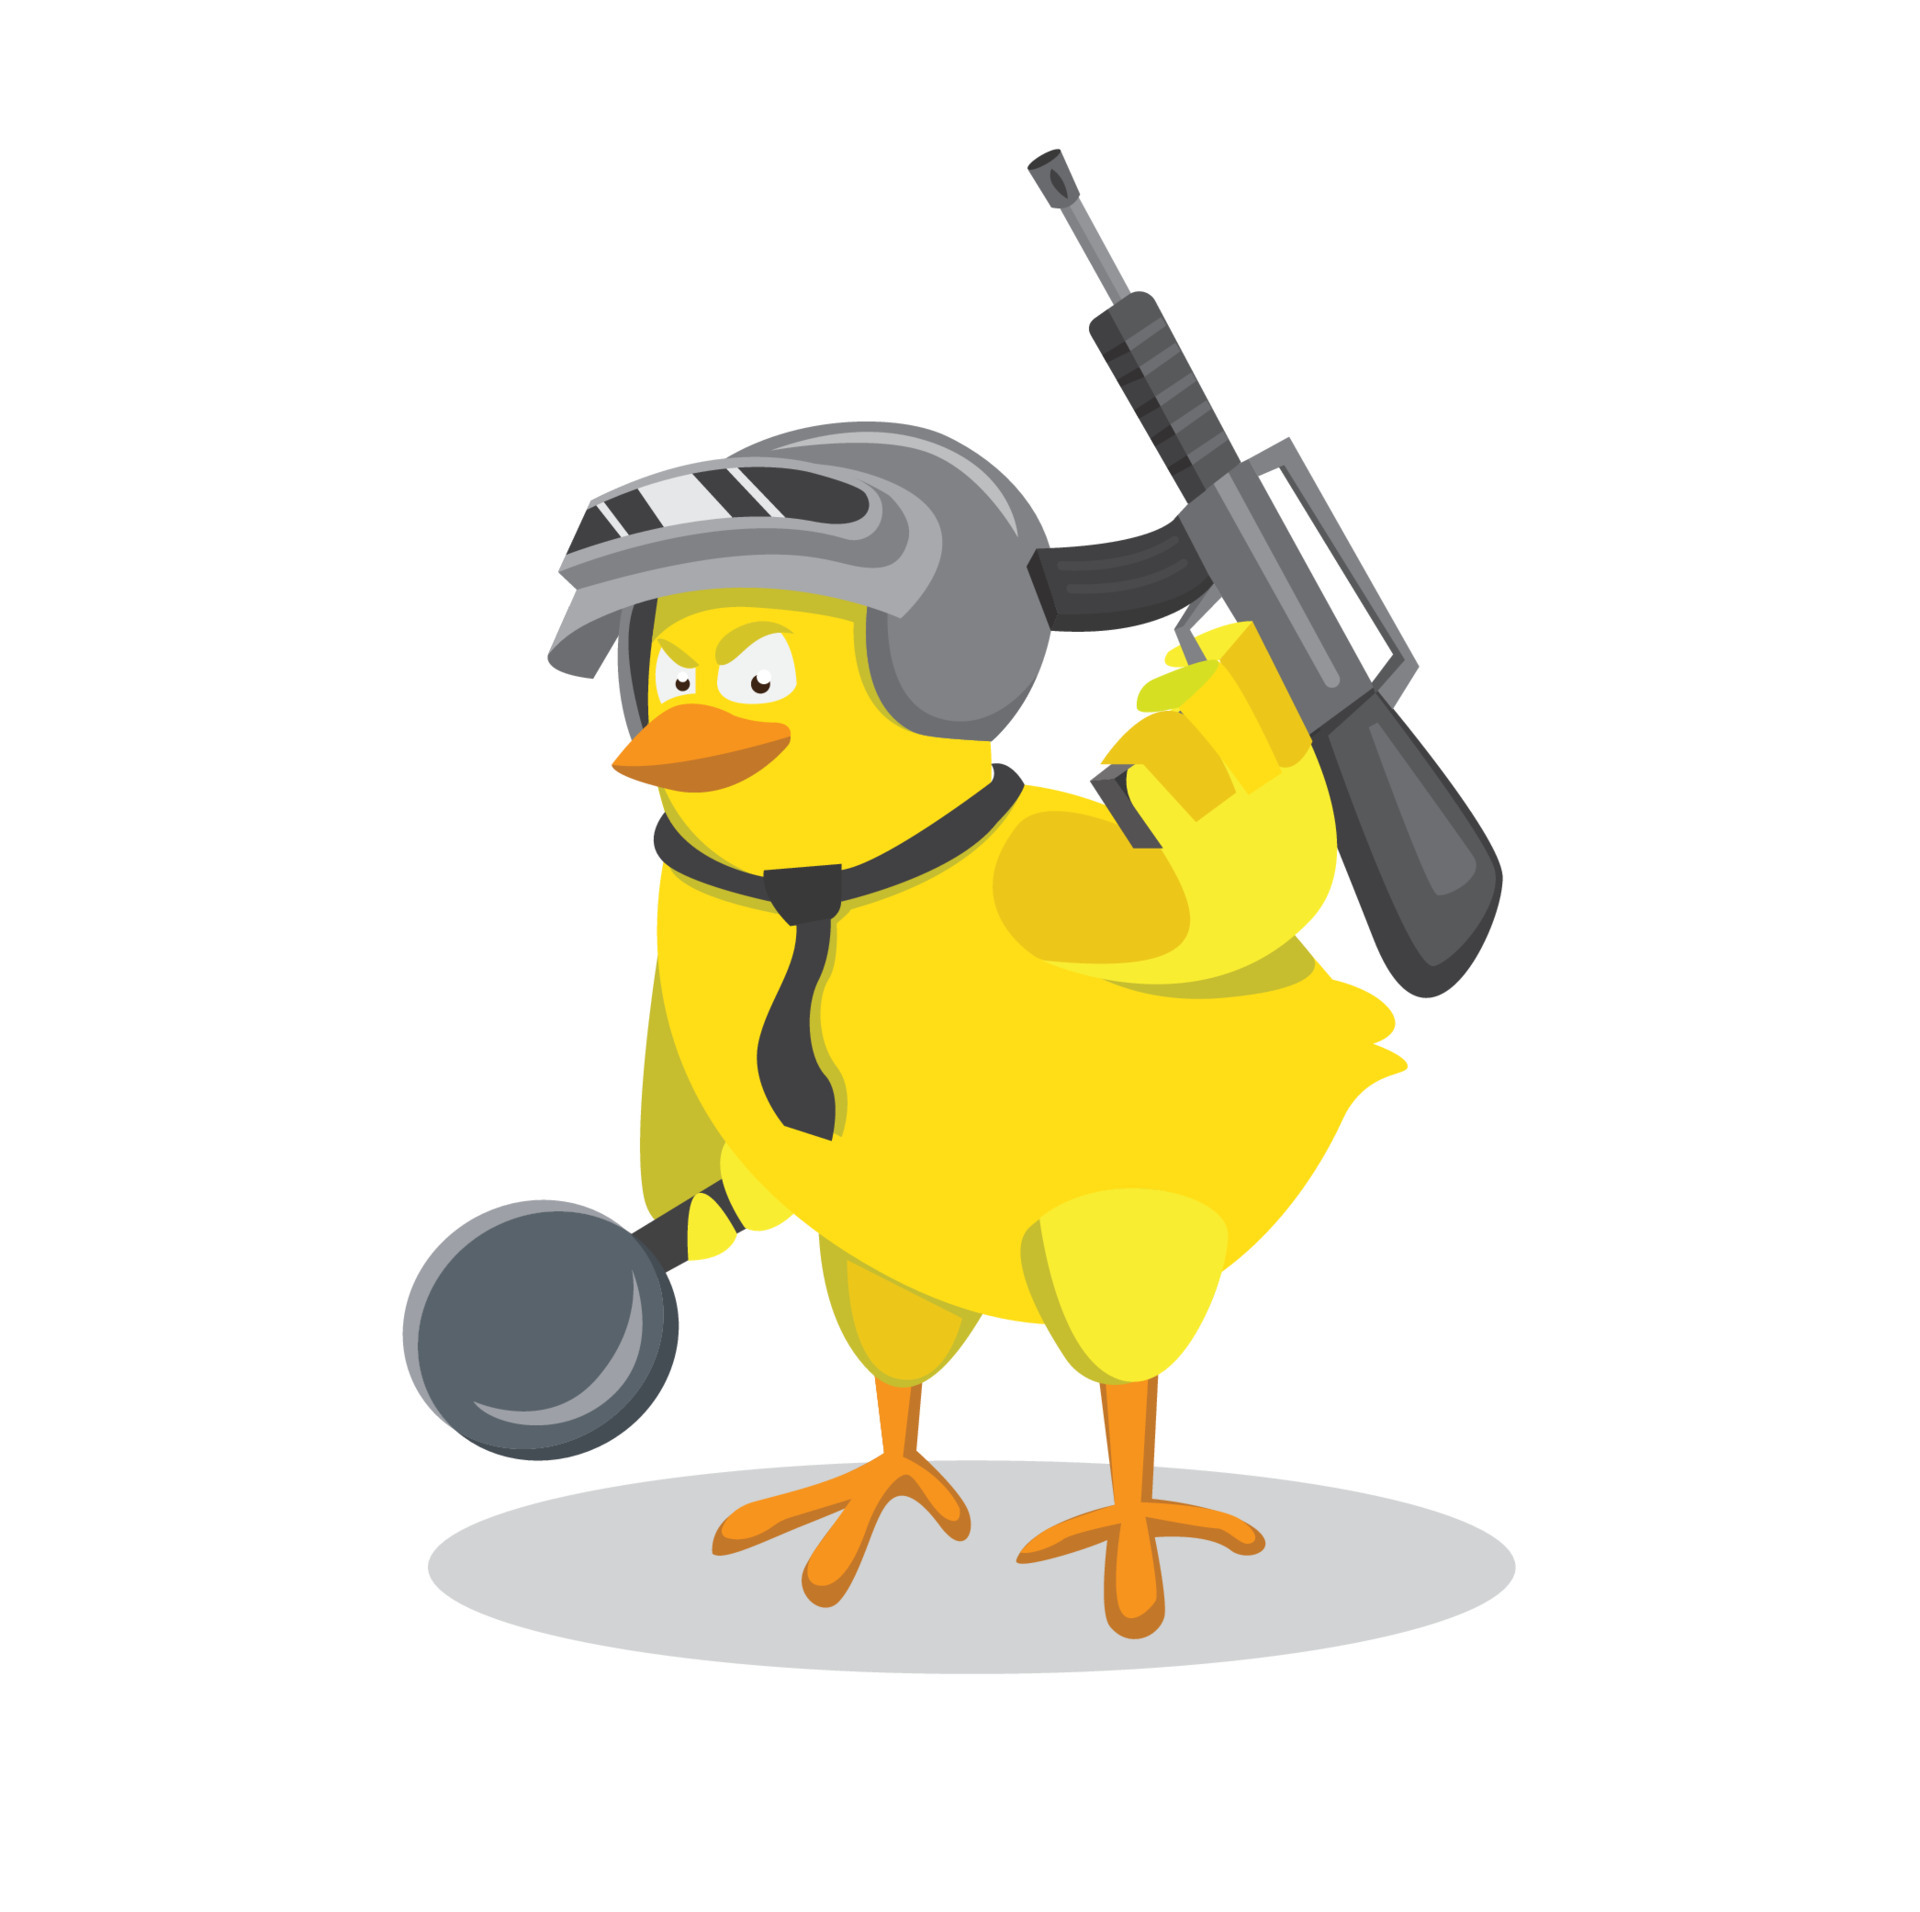 little chicken with gun mascot for shooting game, esport etc in illustration vector 4595200 Vector Art at Vecteezy